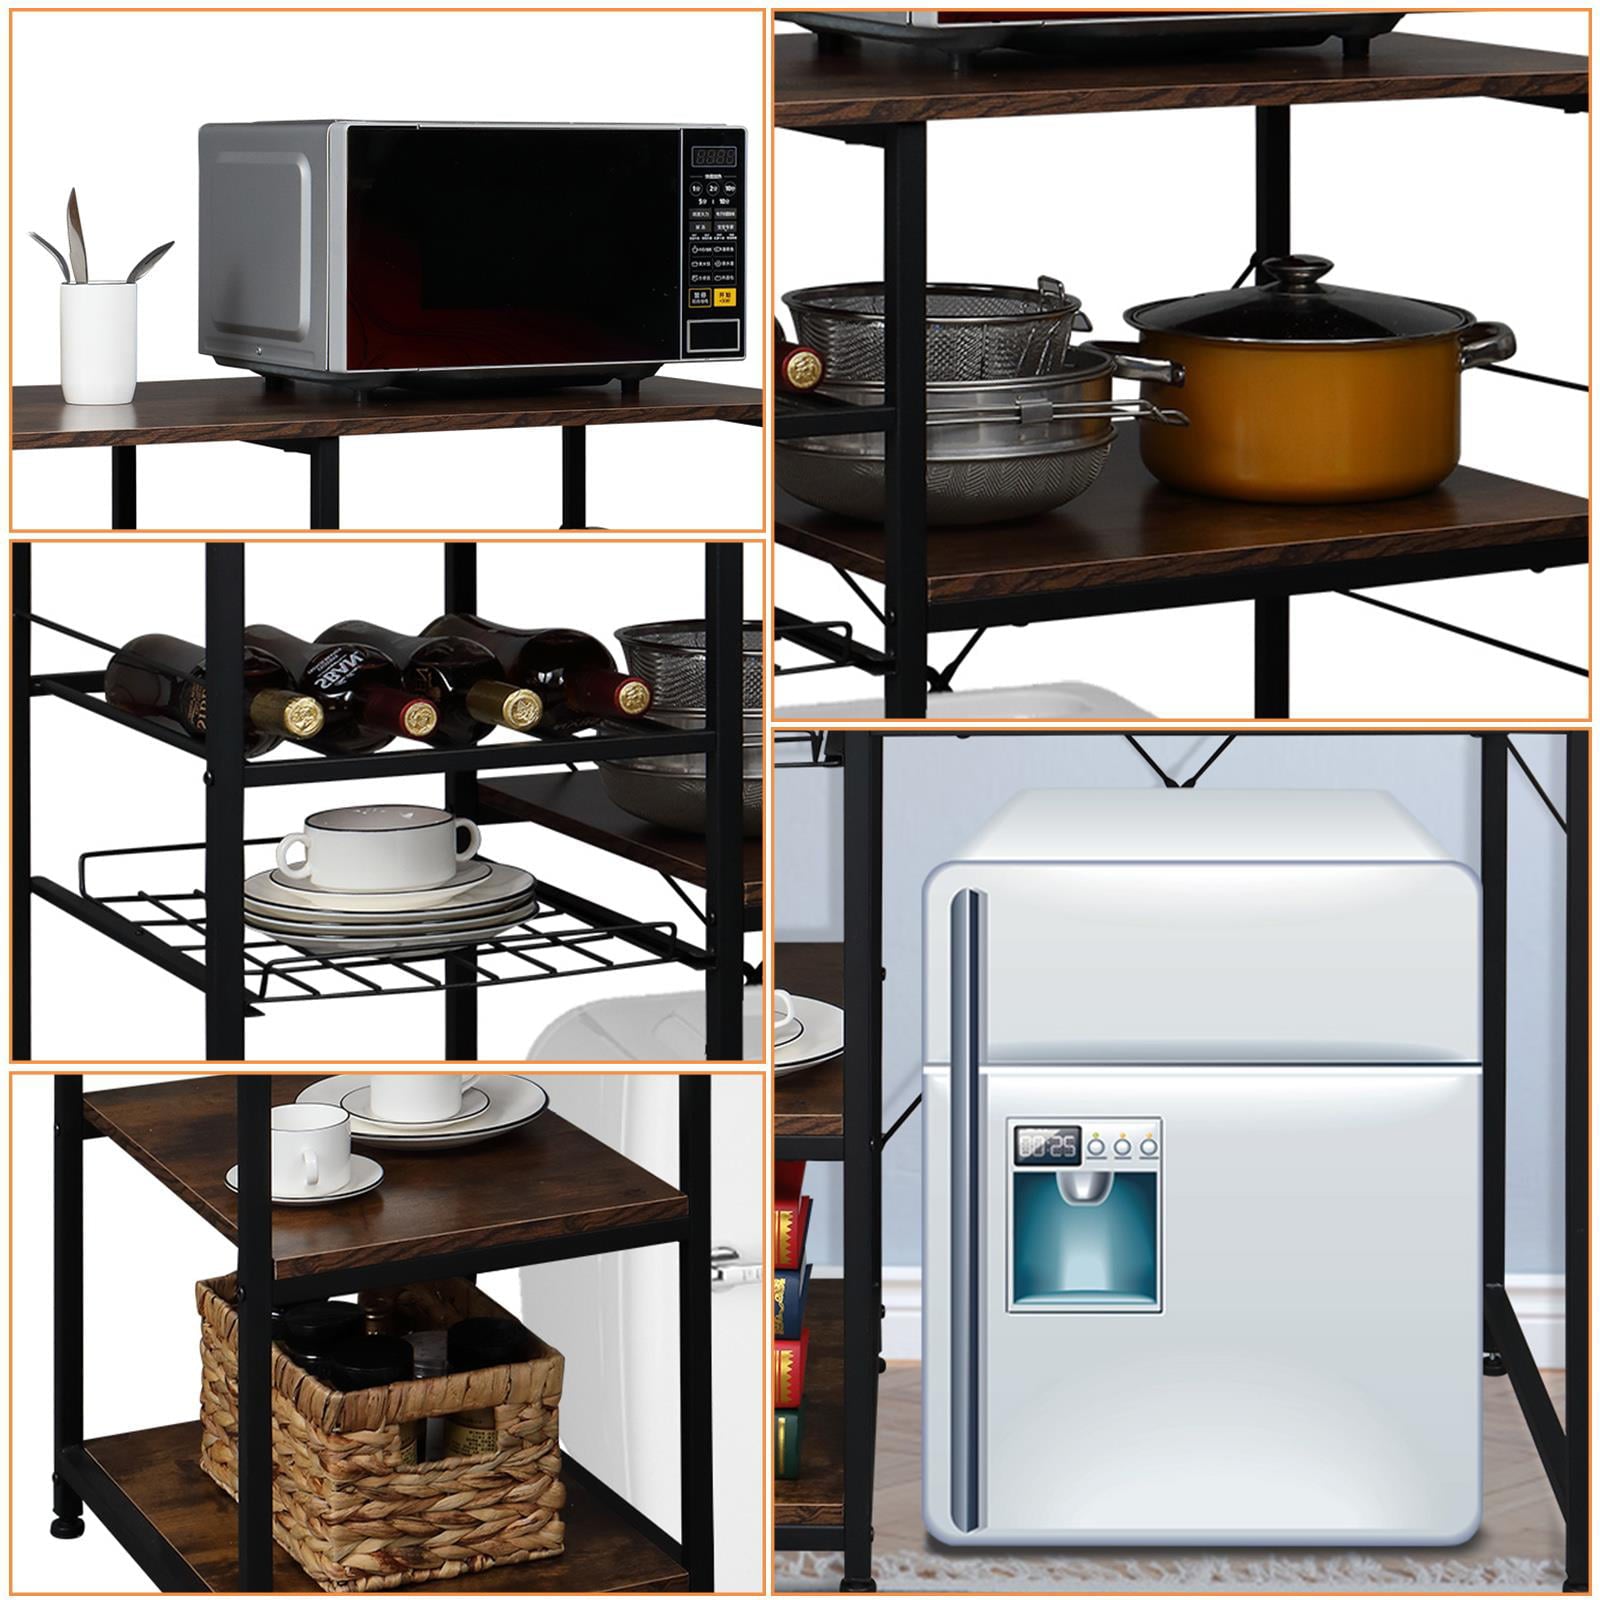 Ktaxon 5-Tier Kitchen Baker's Rack， Industrial Microwave Oven Stand Fit Mini Fridge， Bar Cart， Kitchen Utility Cart Storage Shelf Organizer with Big Drawer and Wine Rack/Drain Basket